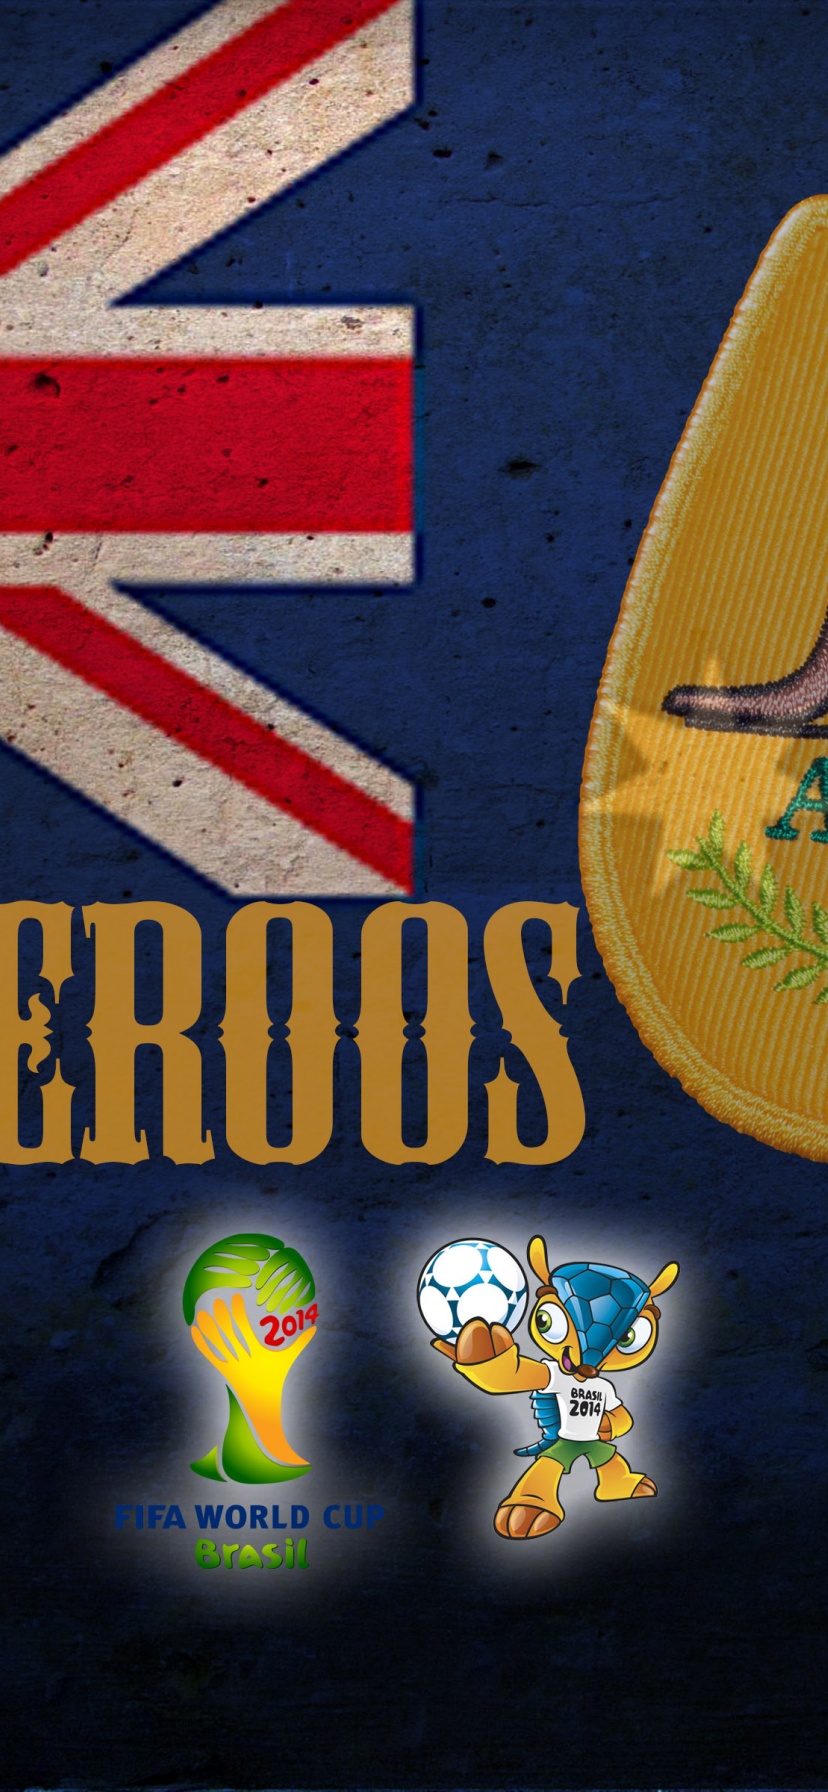 The Socceroos Australia Football Crest